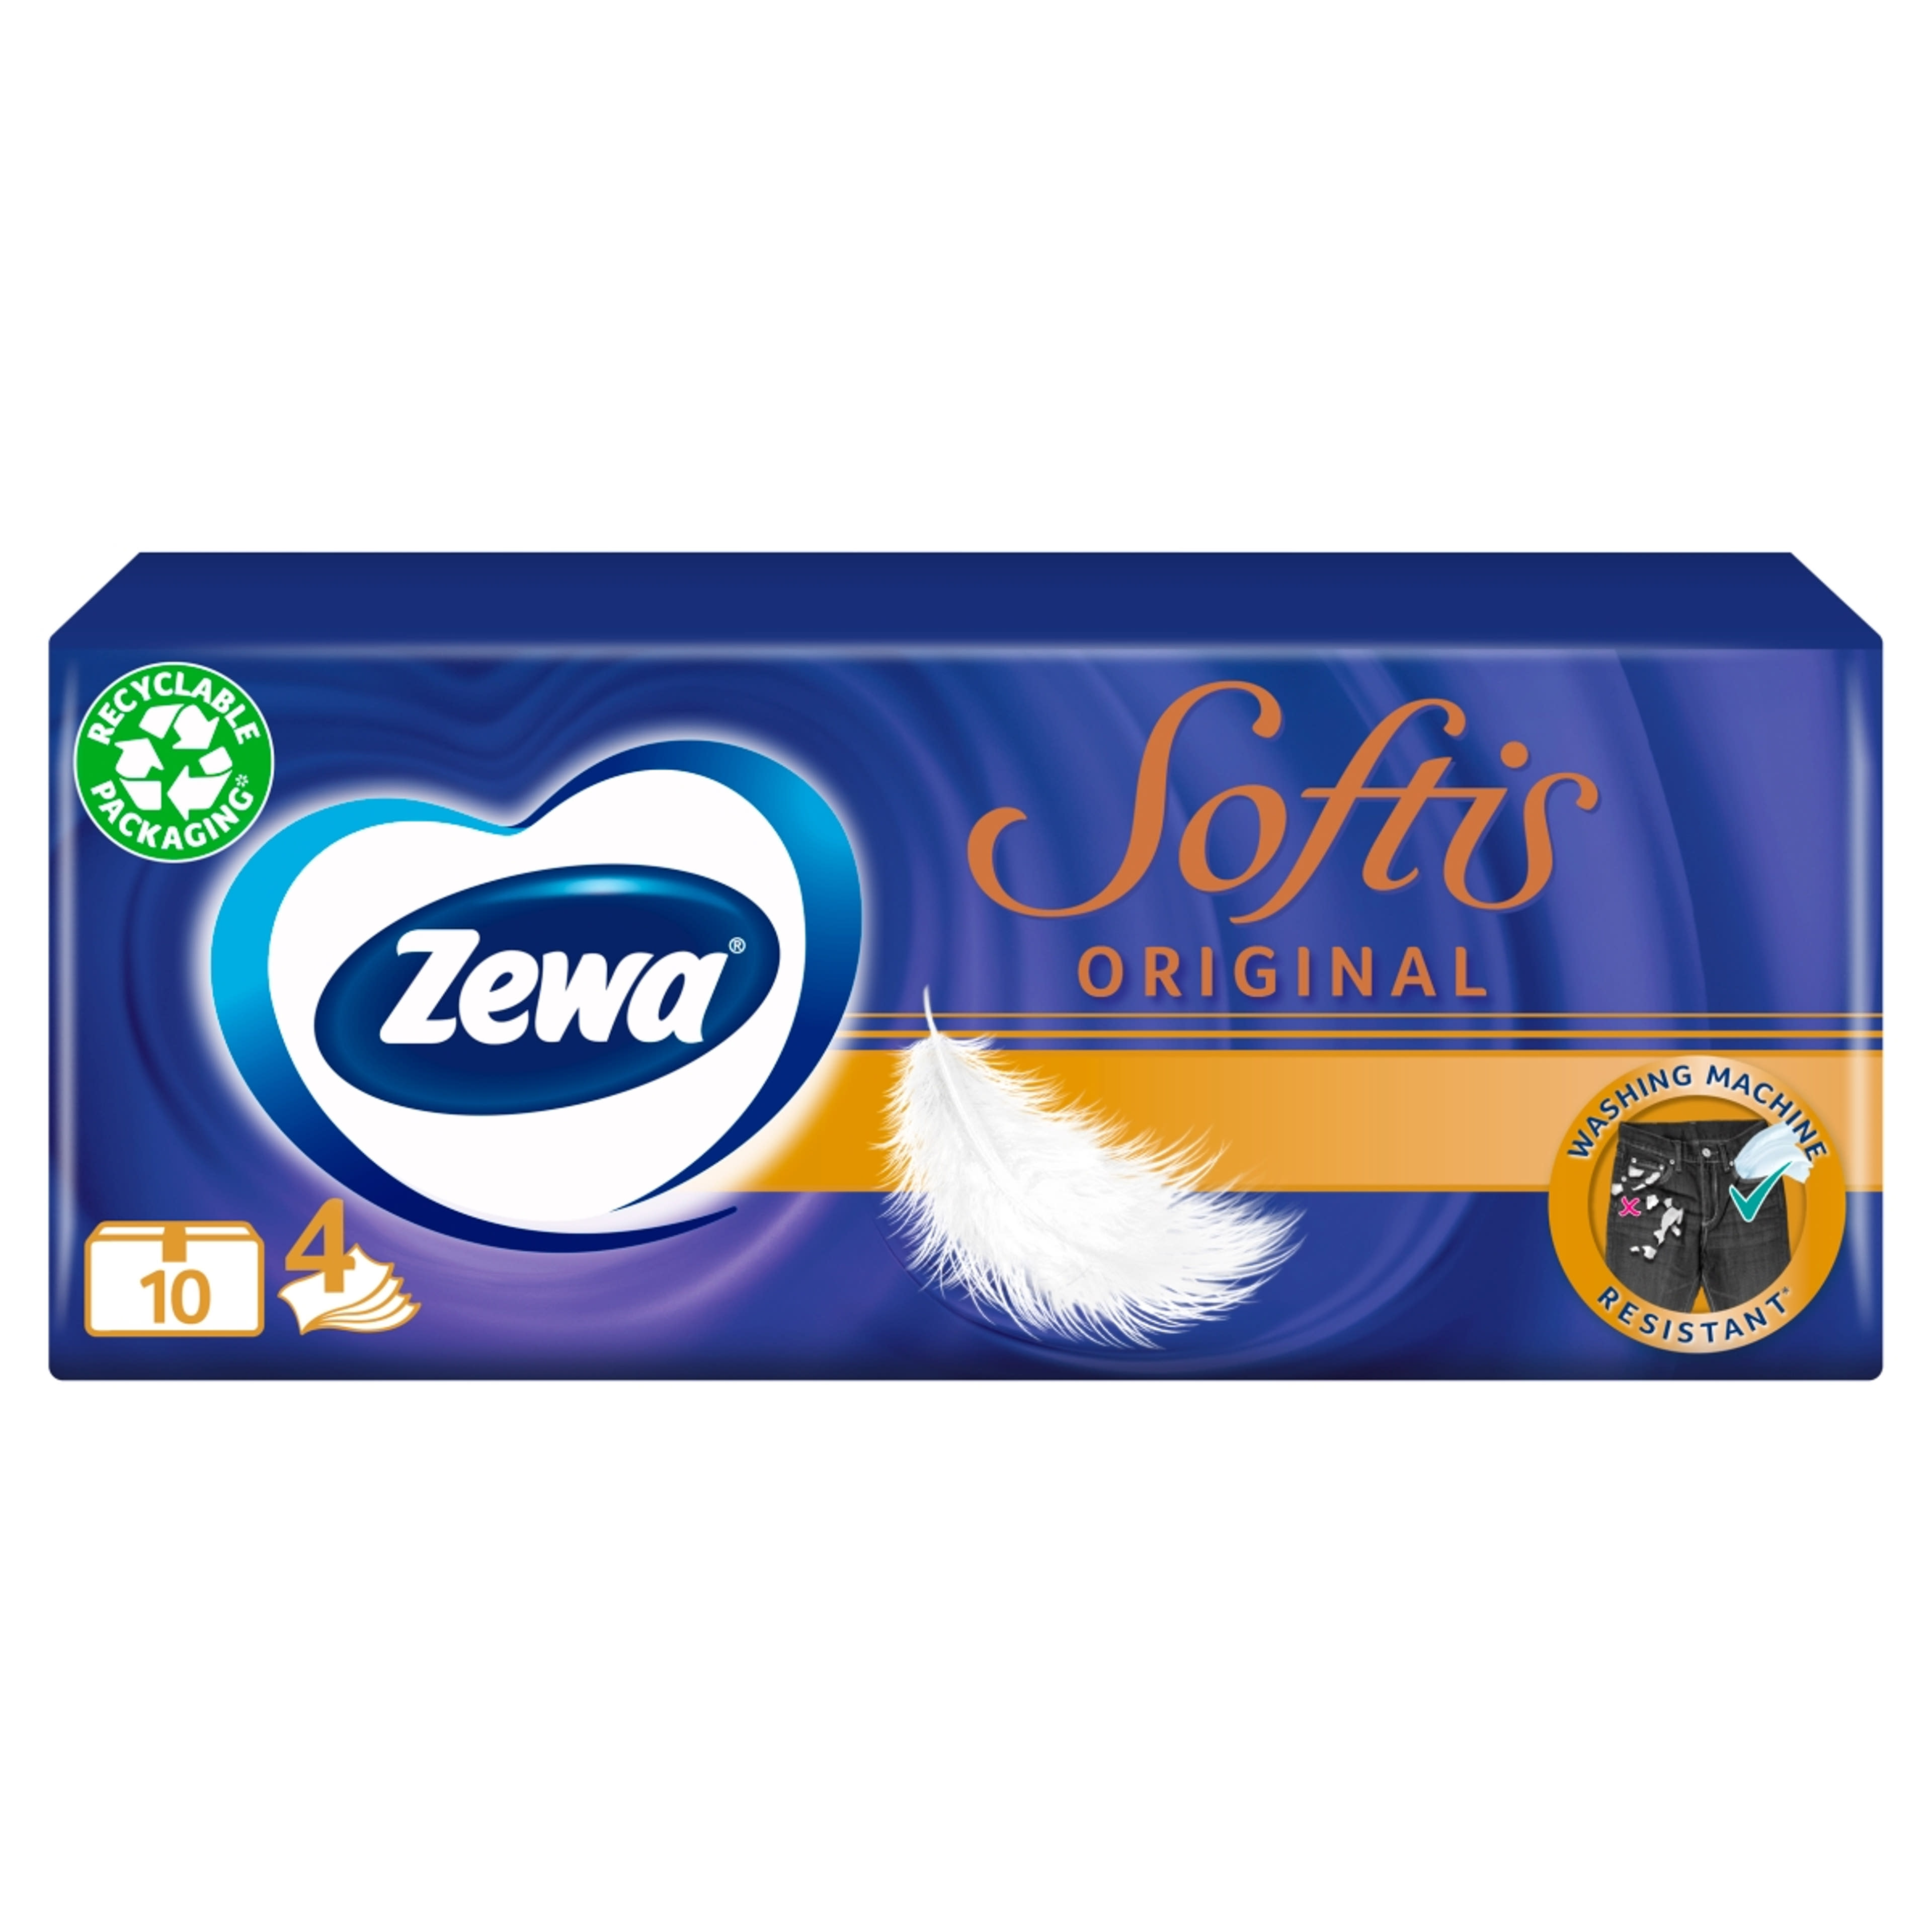 Zewa Softis papírzsebkendő - 10x9 db-3